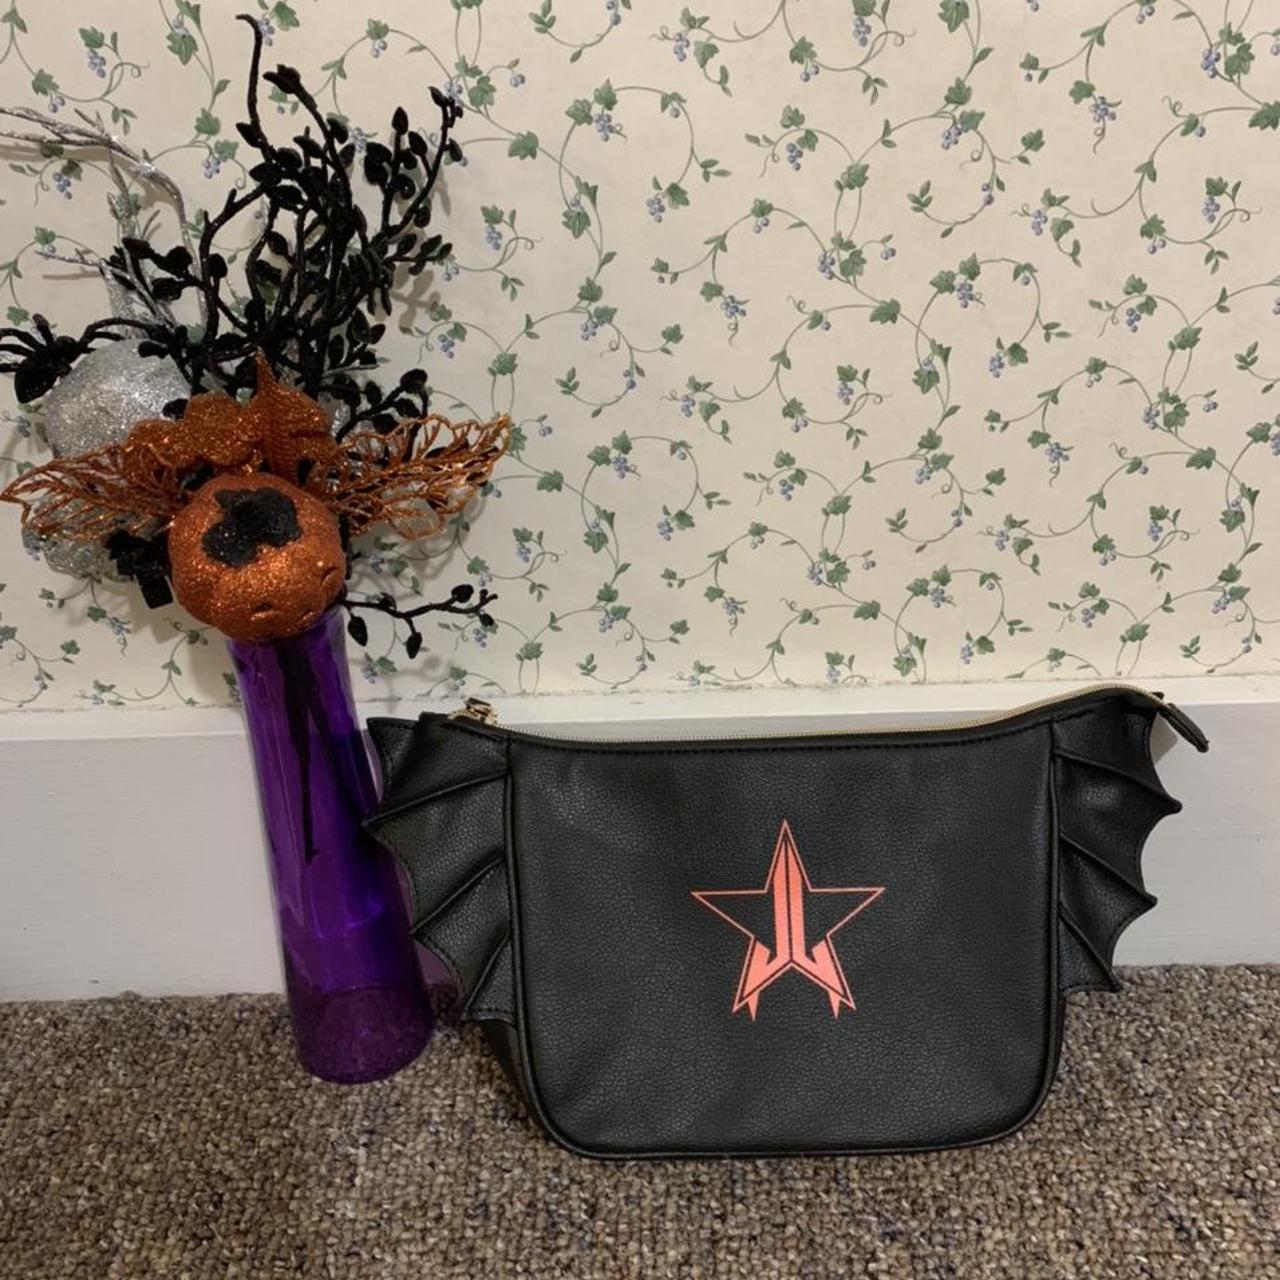 Jeffree Star destroys Louis Vuitton bag for Halloween costume